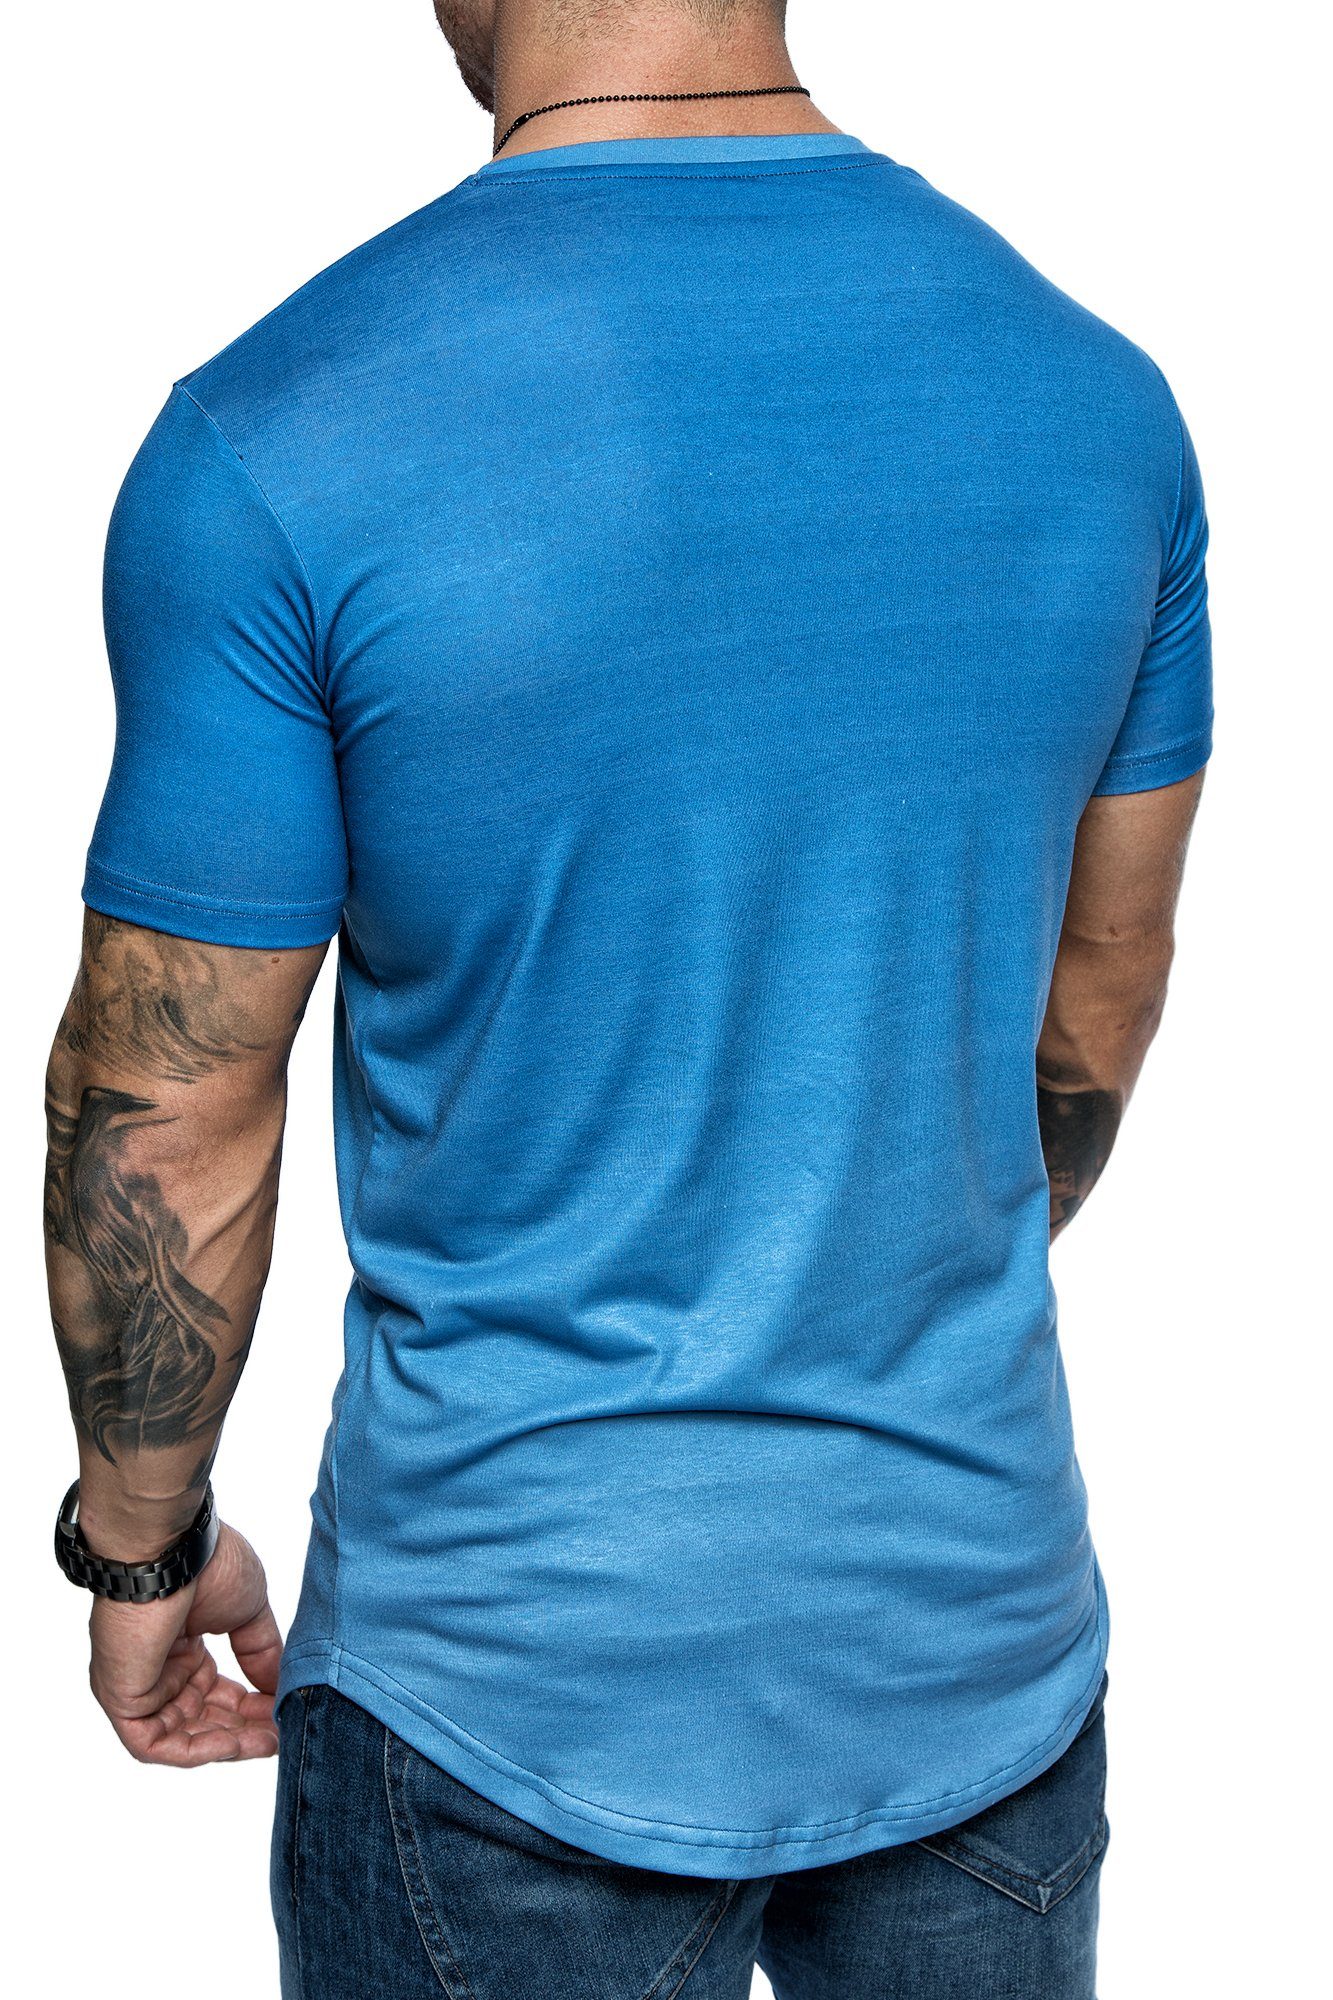 REPUBLIX T-Shirt LIAM mit Royalblau/Türkis Neck Crew Waterfall Oversize Shirt Herren Rundhalsausschnitt Design